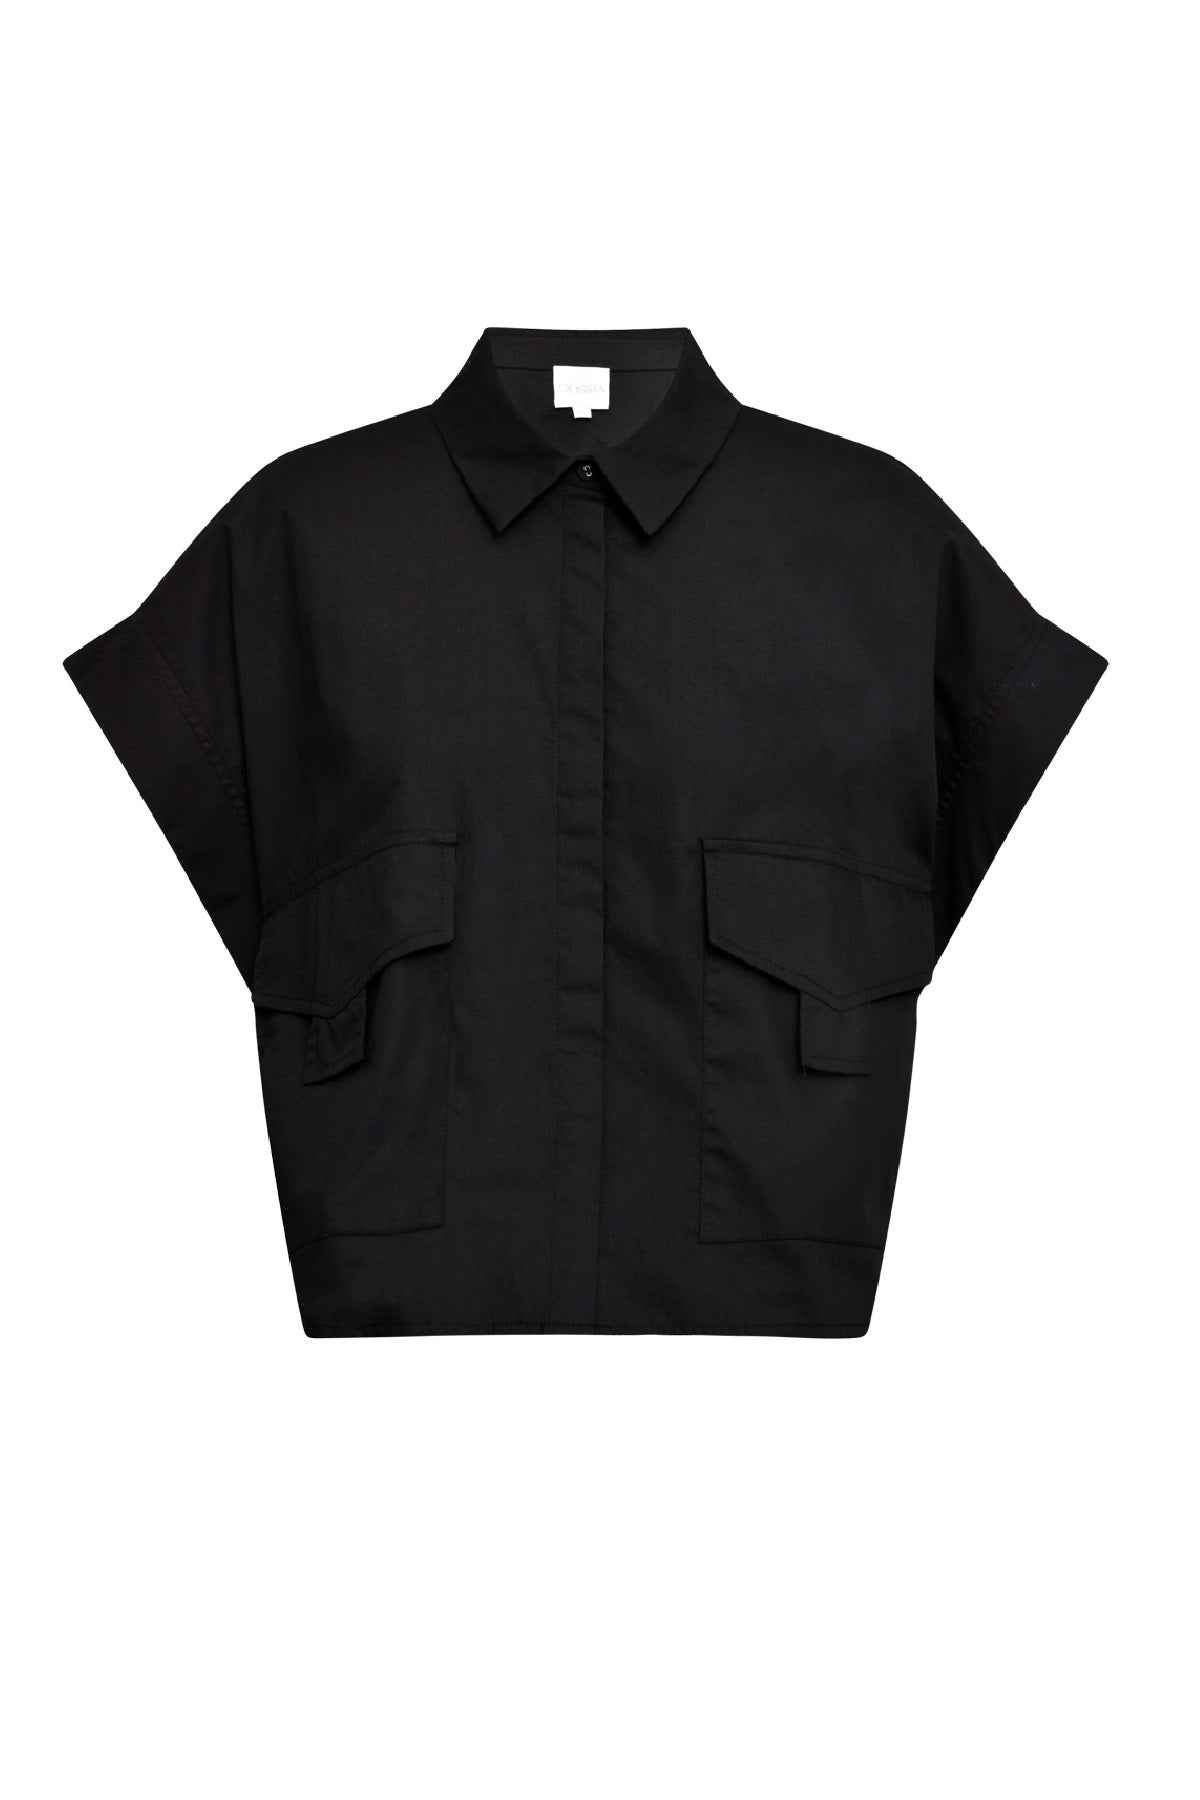 Gossia NikolaGO Shirt, Black